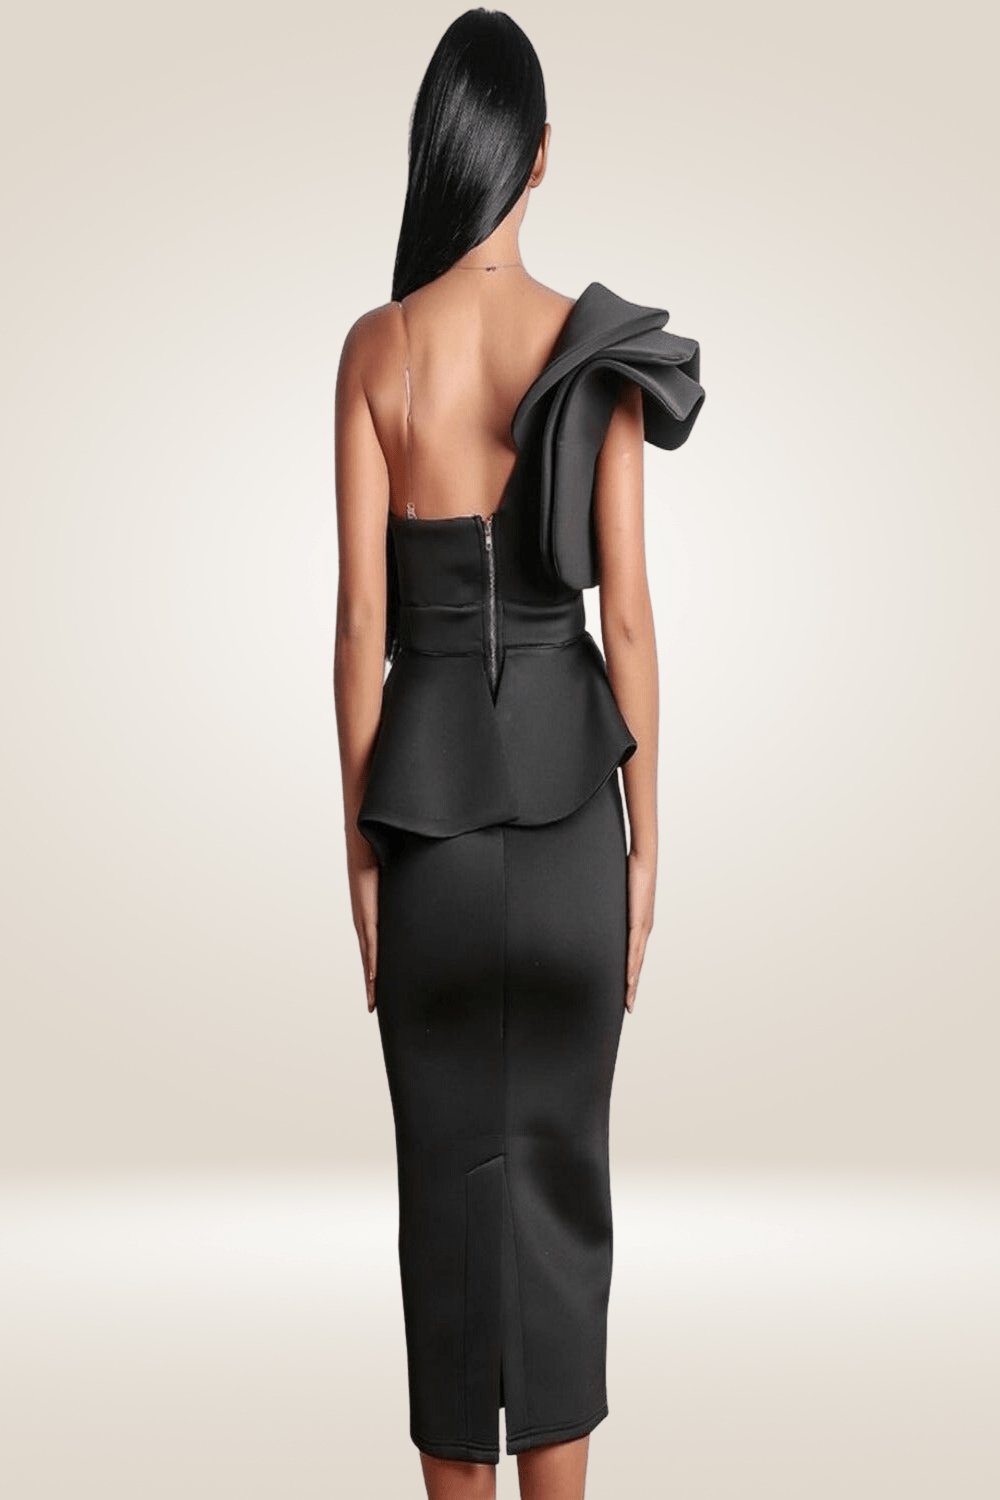 Amelia Black Ruffle Bodycon Top And Skirt Set - TGC Boutique - Bodycon Dress